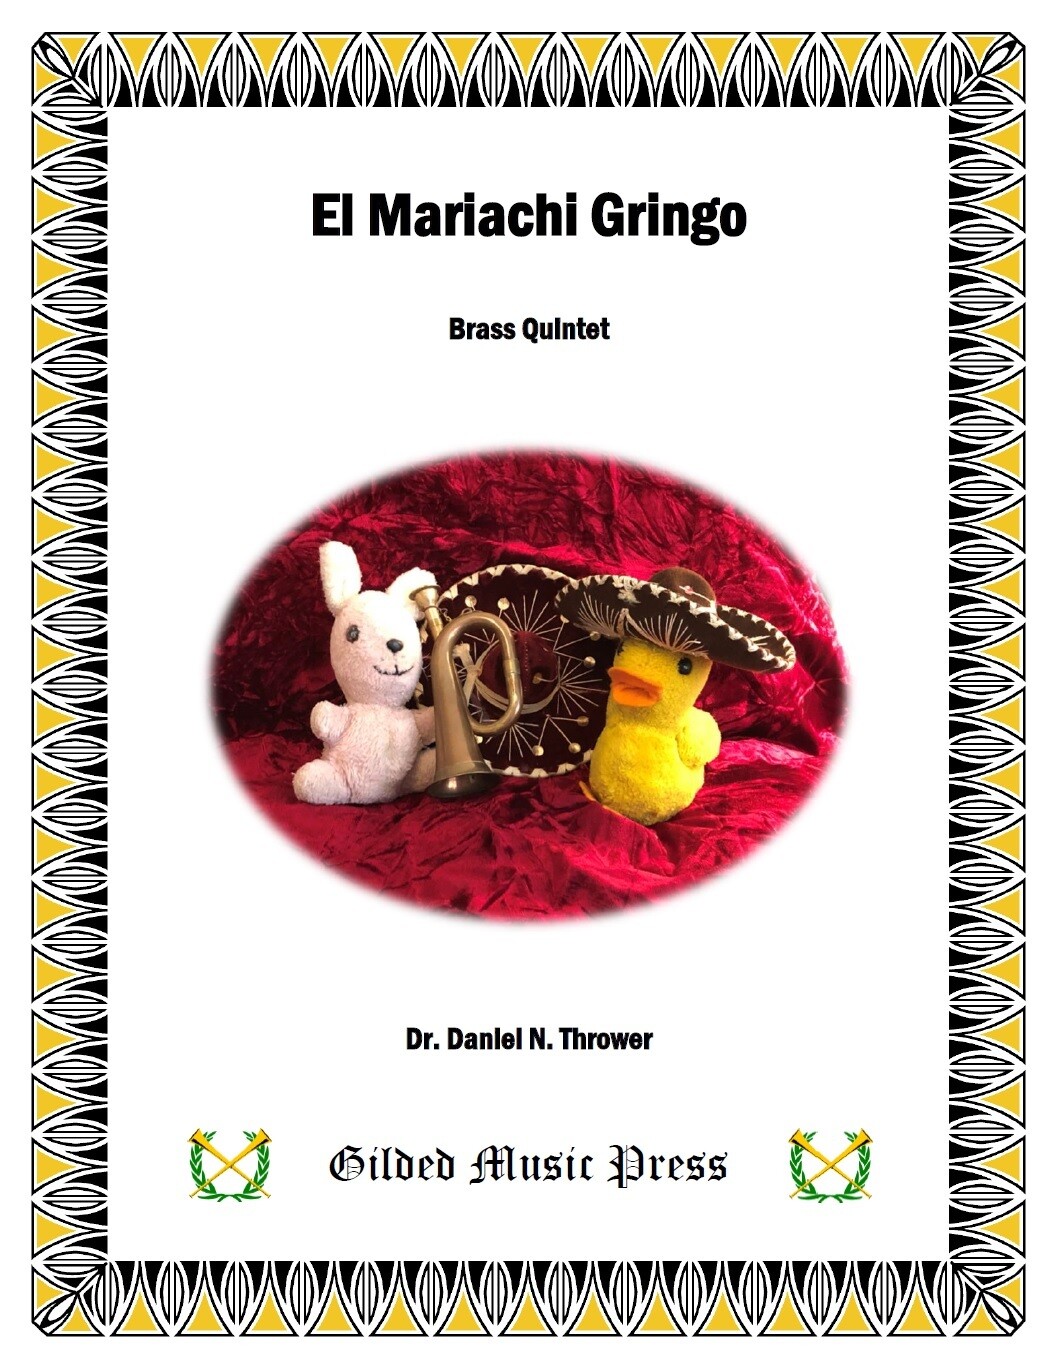 GMP 3013: El Mariachi Gringo (Brass Quintet), Dr. Daniel Thrower